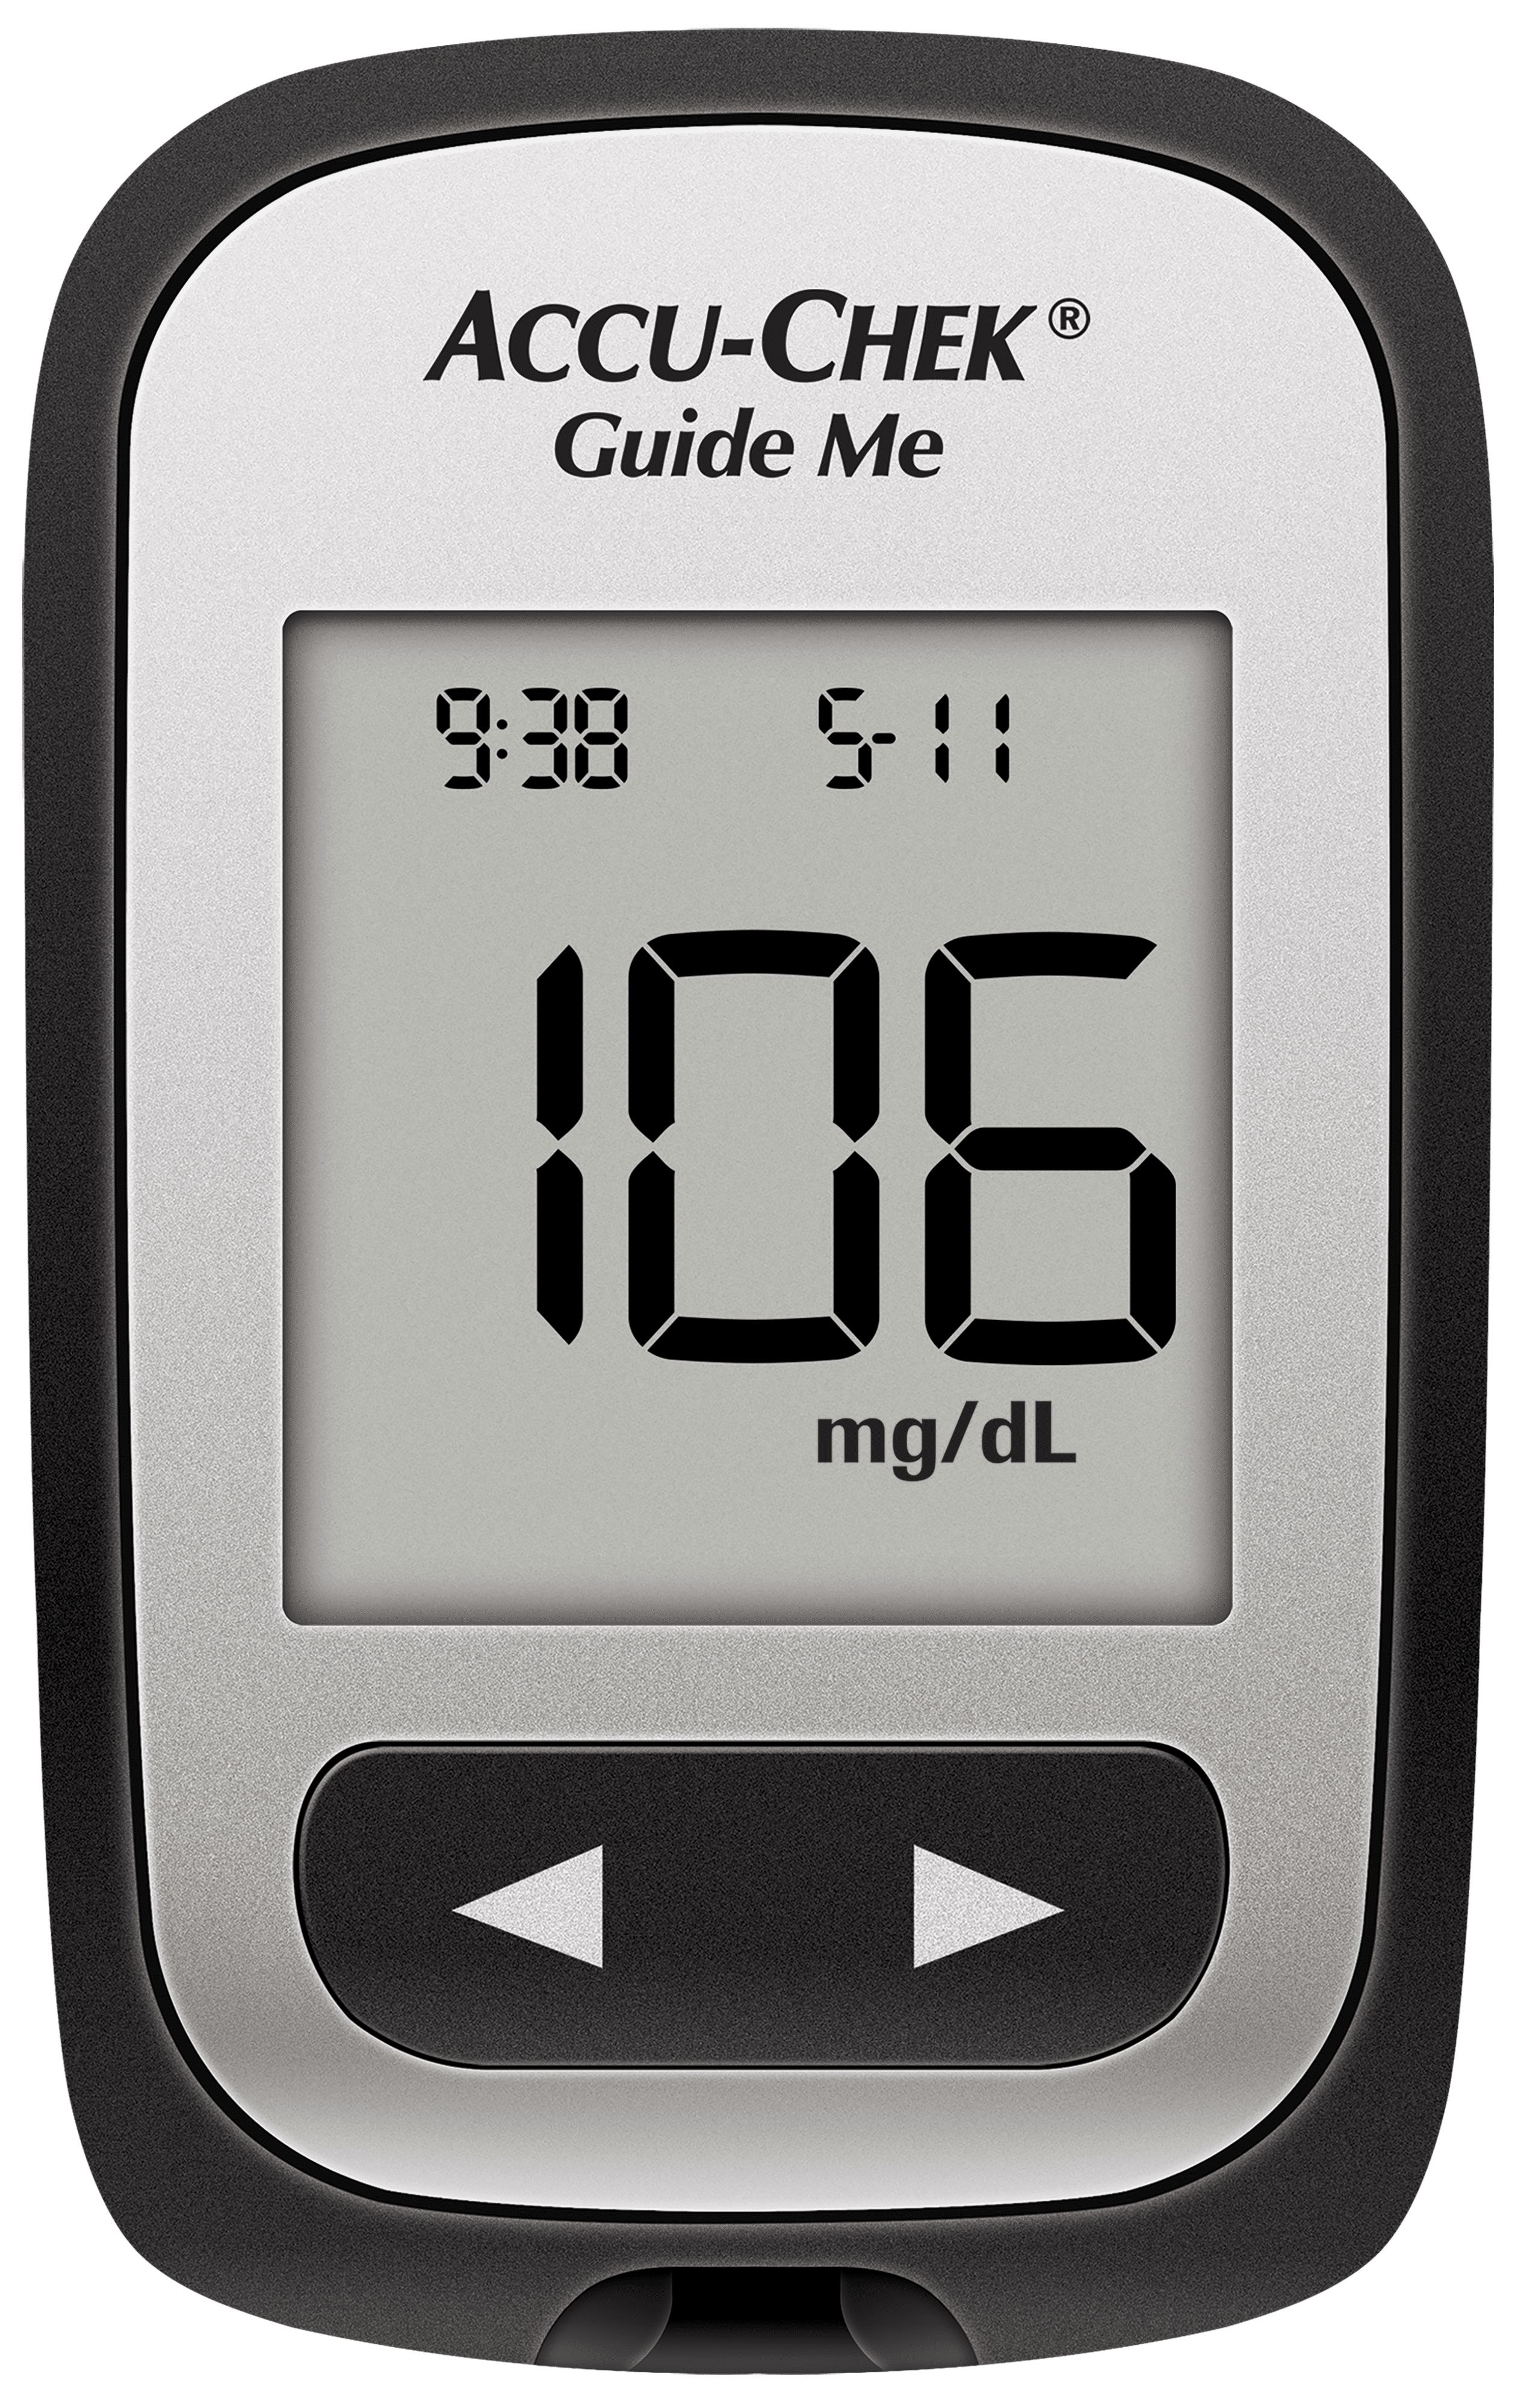 Accu-Chek® Guide Me blood glucose meter (measurement in mg/dL)